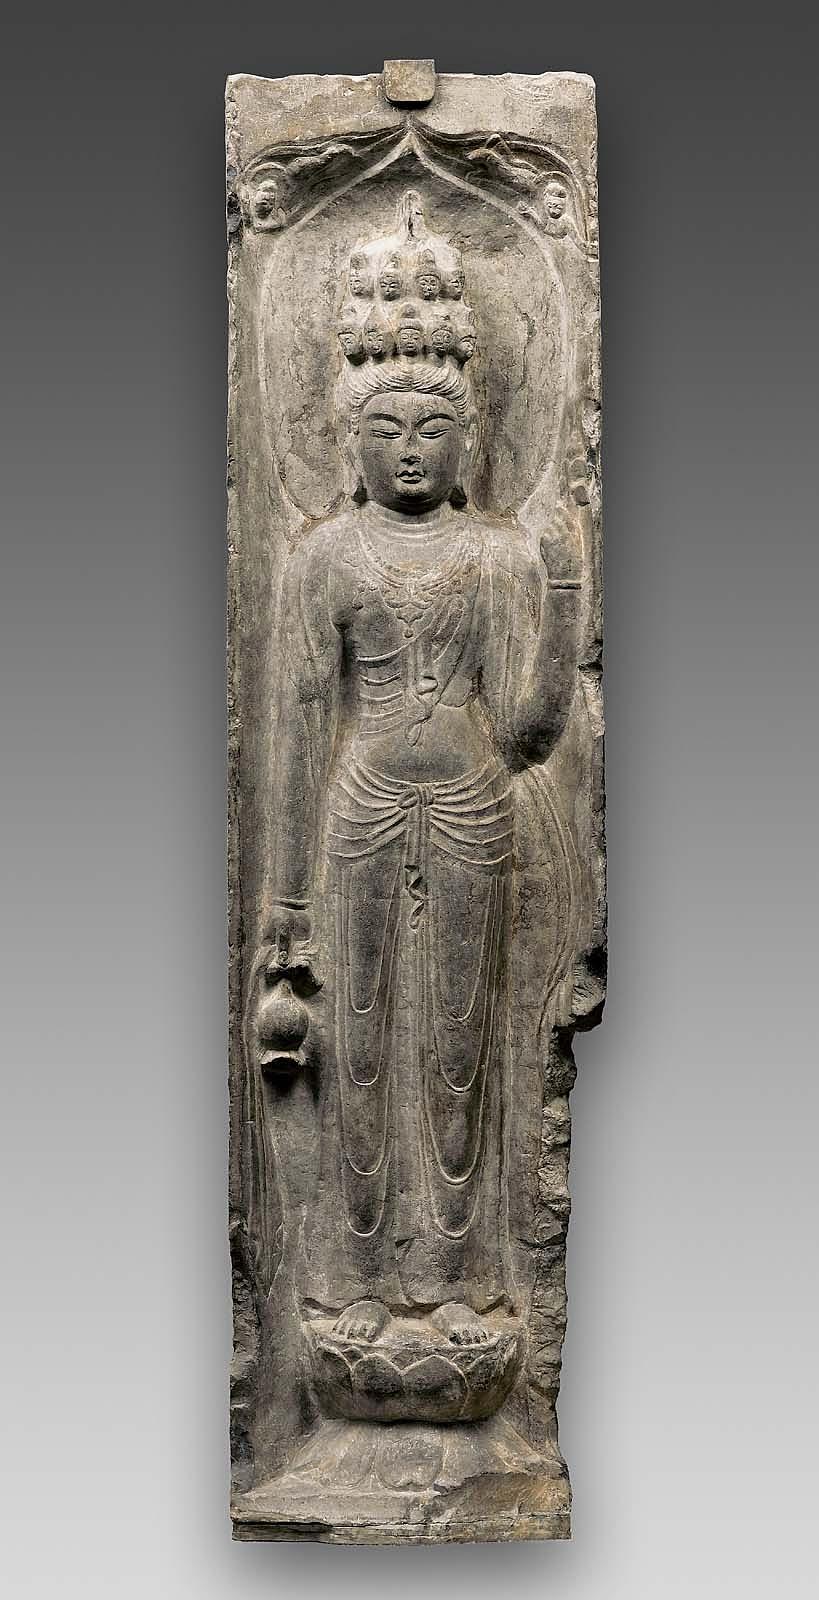 Eleven-headed bodhisattva, 7th century C.E. (Tang dynasty), limestone, attributed to Baoqingsi Temple in Xian, China, 117.7 x 27.9 cm (Museum of Fine Arts, Boston)